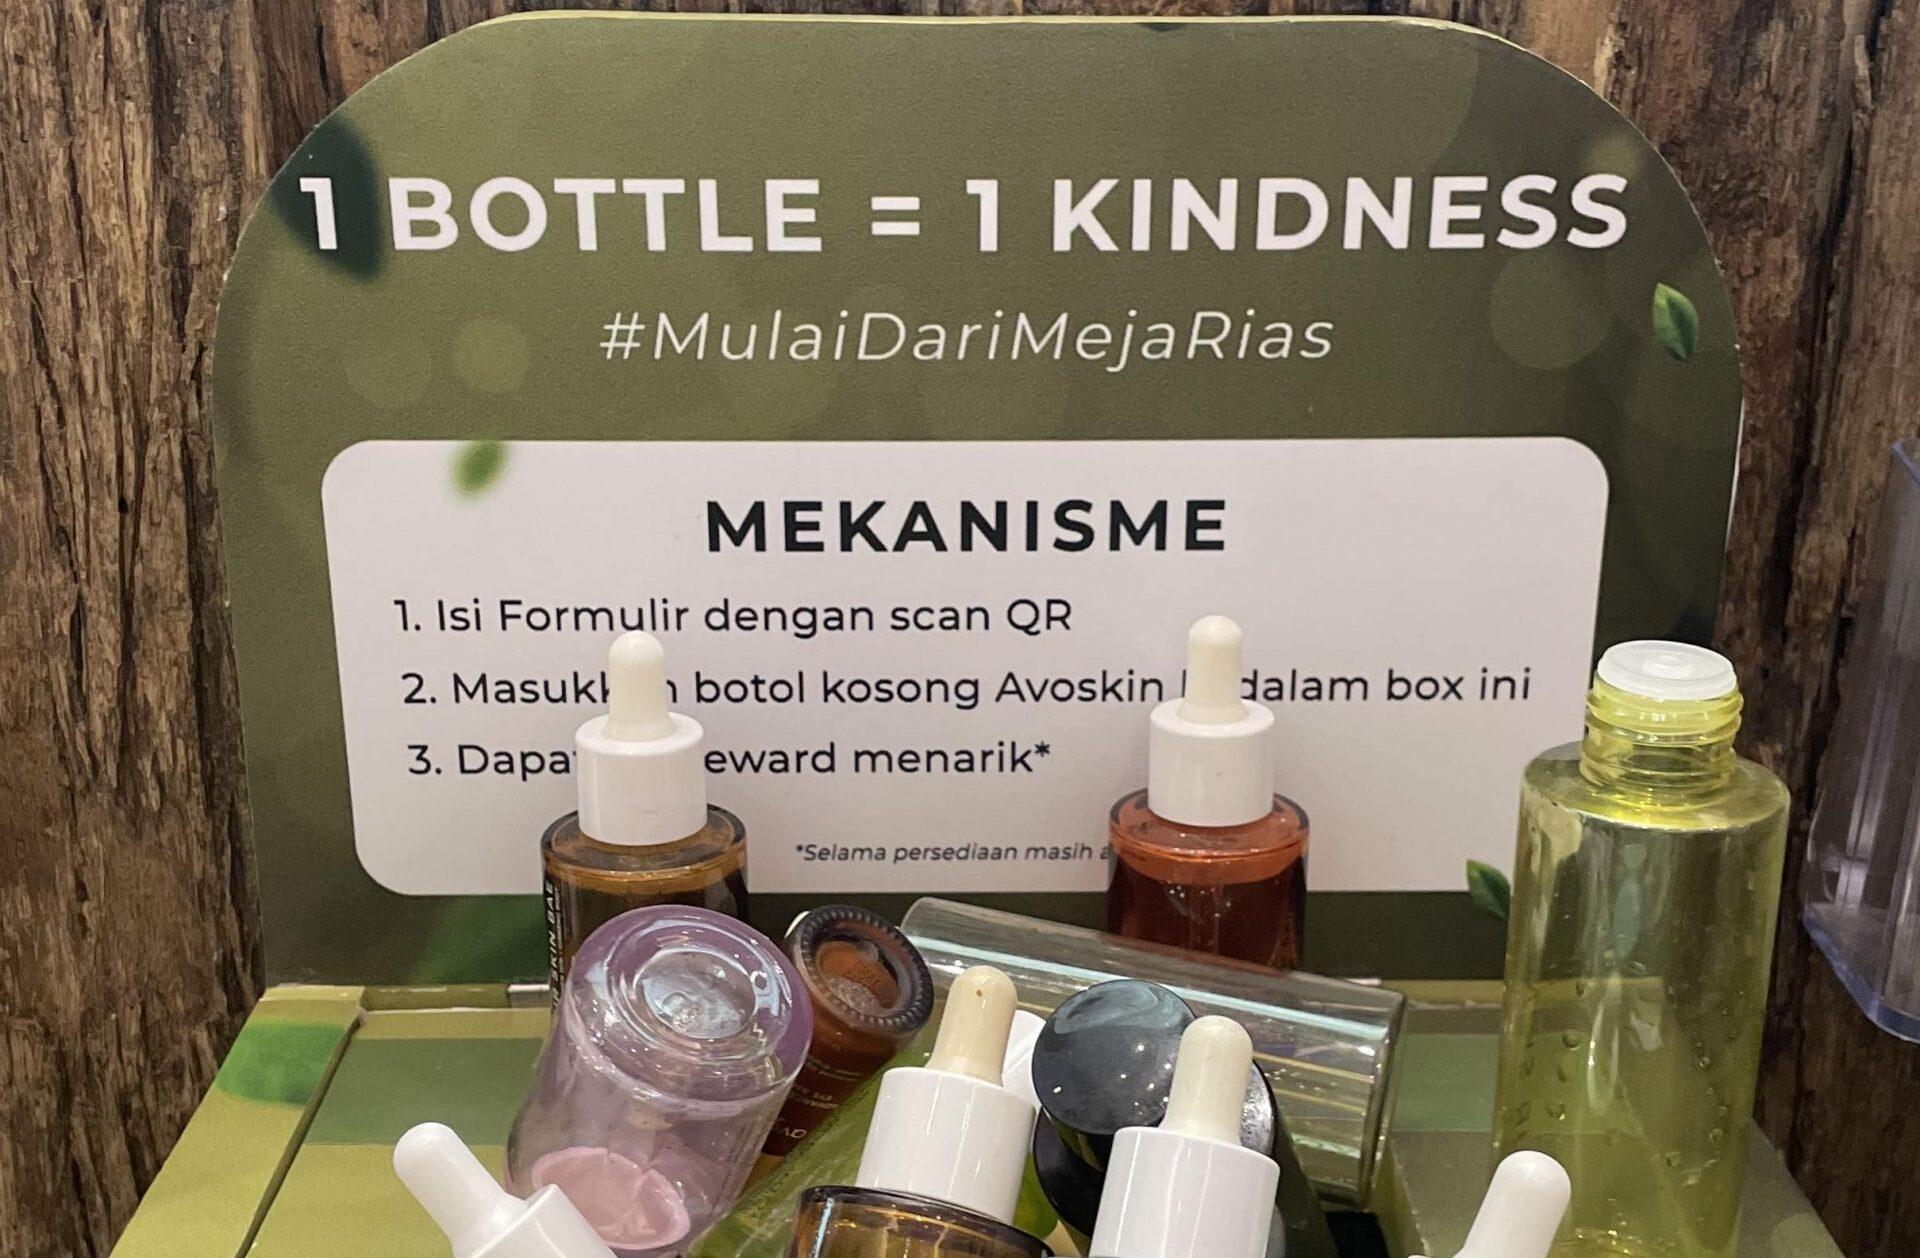 #MulaiDariMejaRias 1 Bottle = 1 Kindness with Yayasan Pita Kuning Indonesia